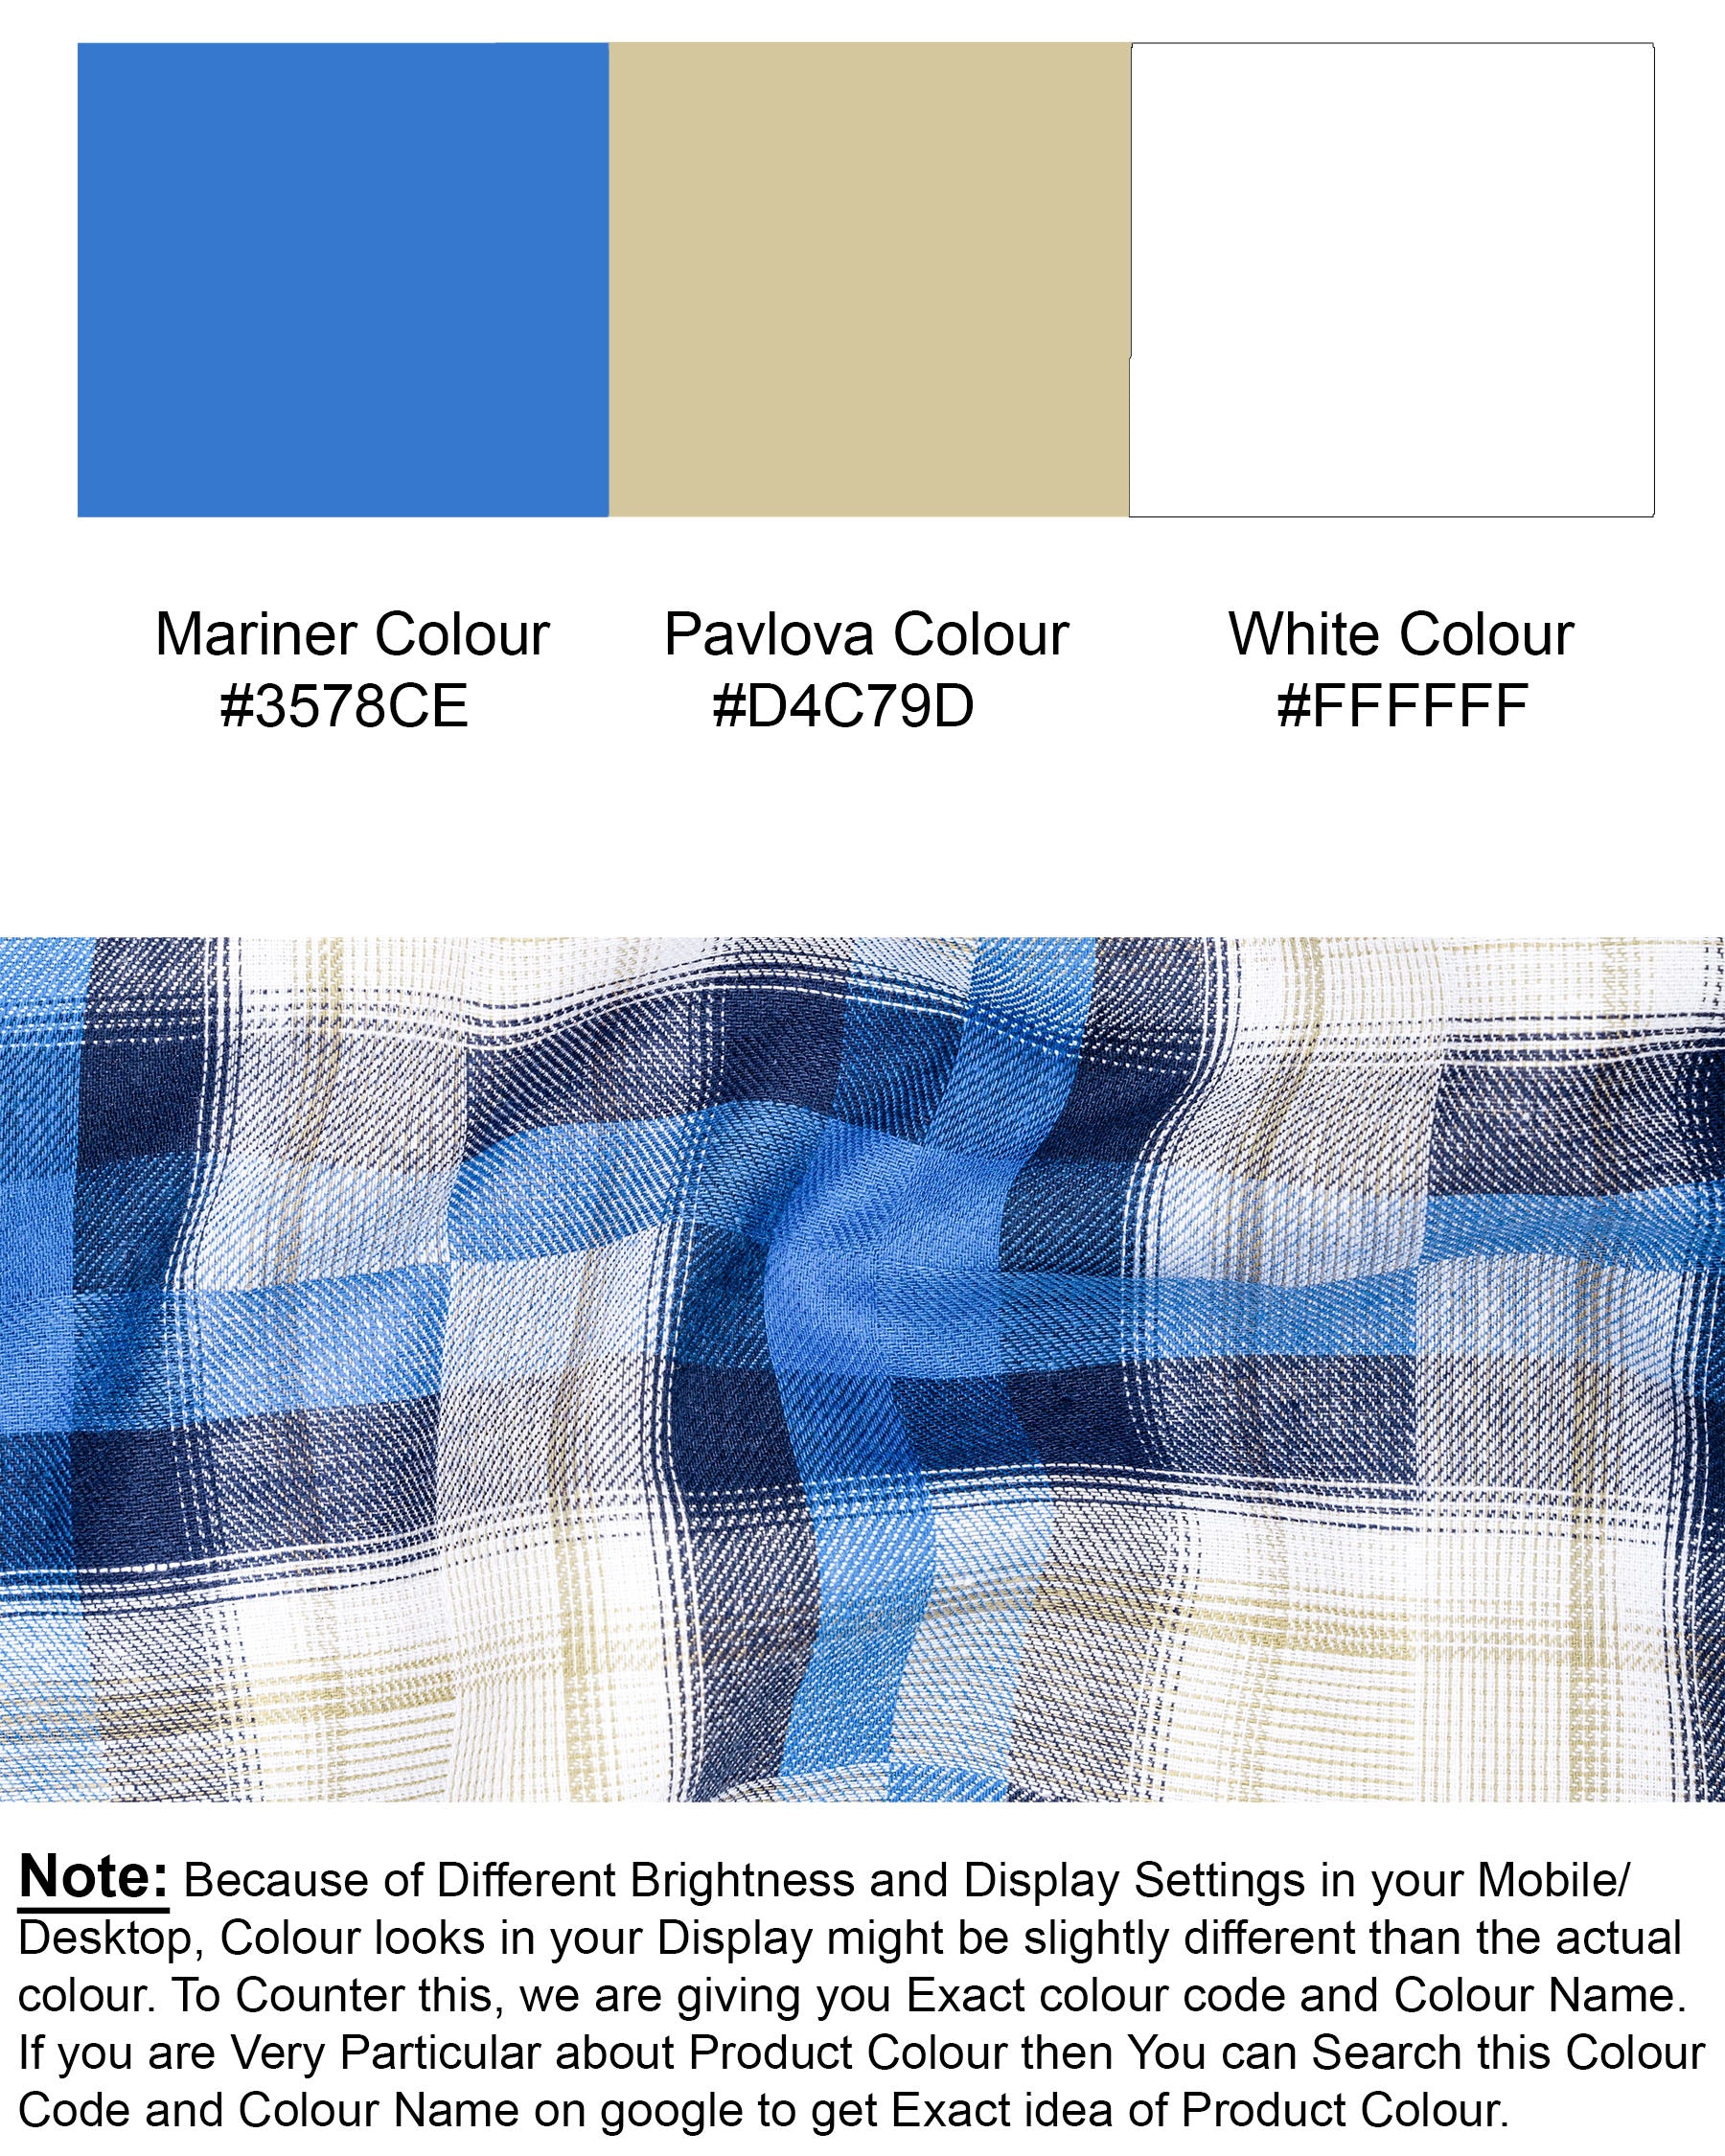 Mariner Blue and Pavlova Beige Twill Plaid Textured Premium Cotton Shirt 6681-BD-BLE-38,6681-BD-BLE-38,6681-BD-BLE-39,6681-BD-BLE-39,6681-BD-BLE-40,6681-BD-BLE-40,6681-BD-BLE-42,6681-BD-BLE-42,6681-BD-BLE-44,6681-BD-BLE-44,6681-BD-BLE-46,6681-BD-BLE-46,6681-BD-BLE-48,6681-BD-BLE-48,6681-BD-BLE-50,6681-BD-BLE-50,6681-BD-BLE-52,6681-BD-BLE-52